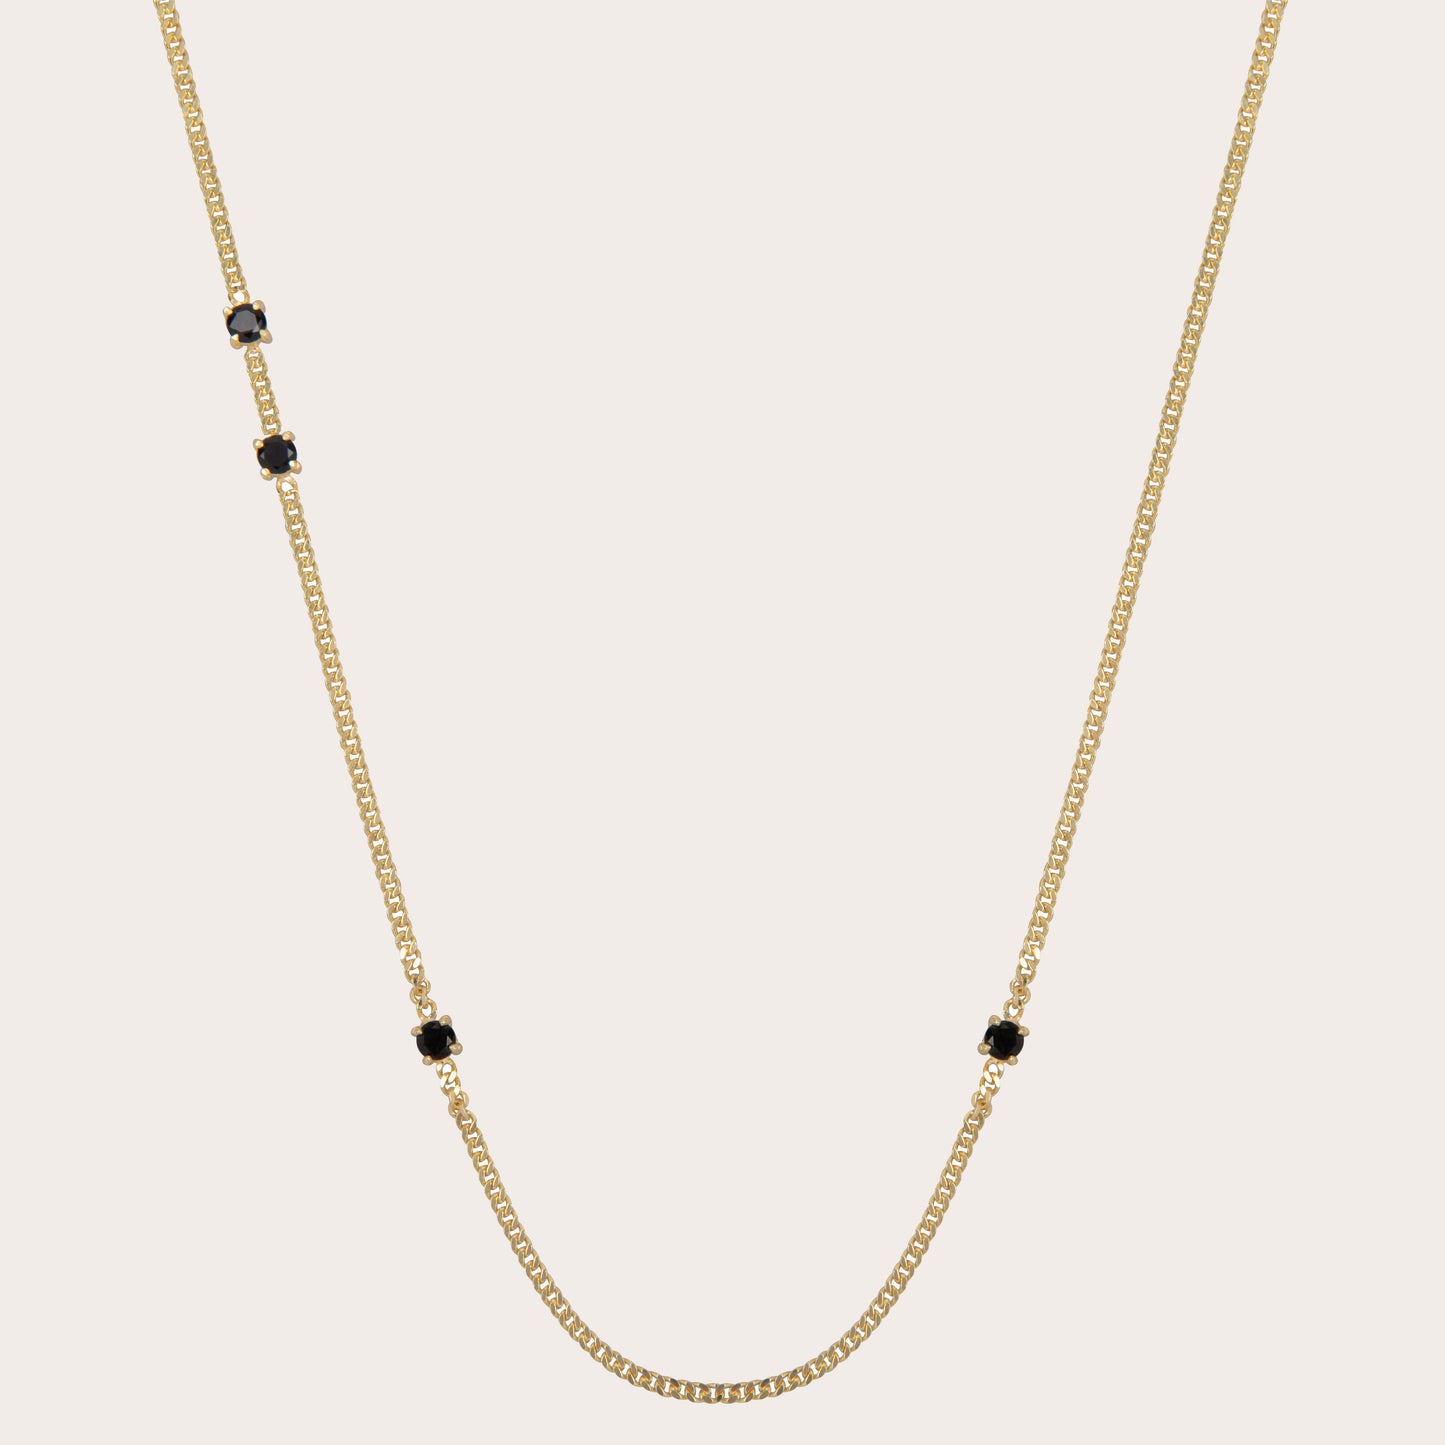 Gemma spinel necklace